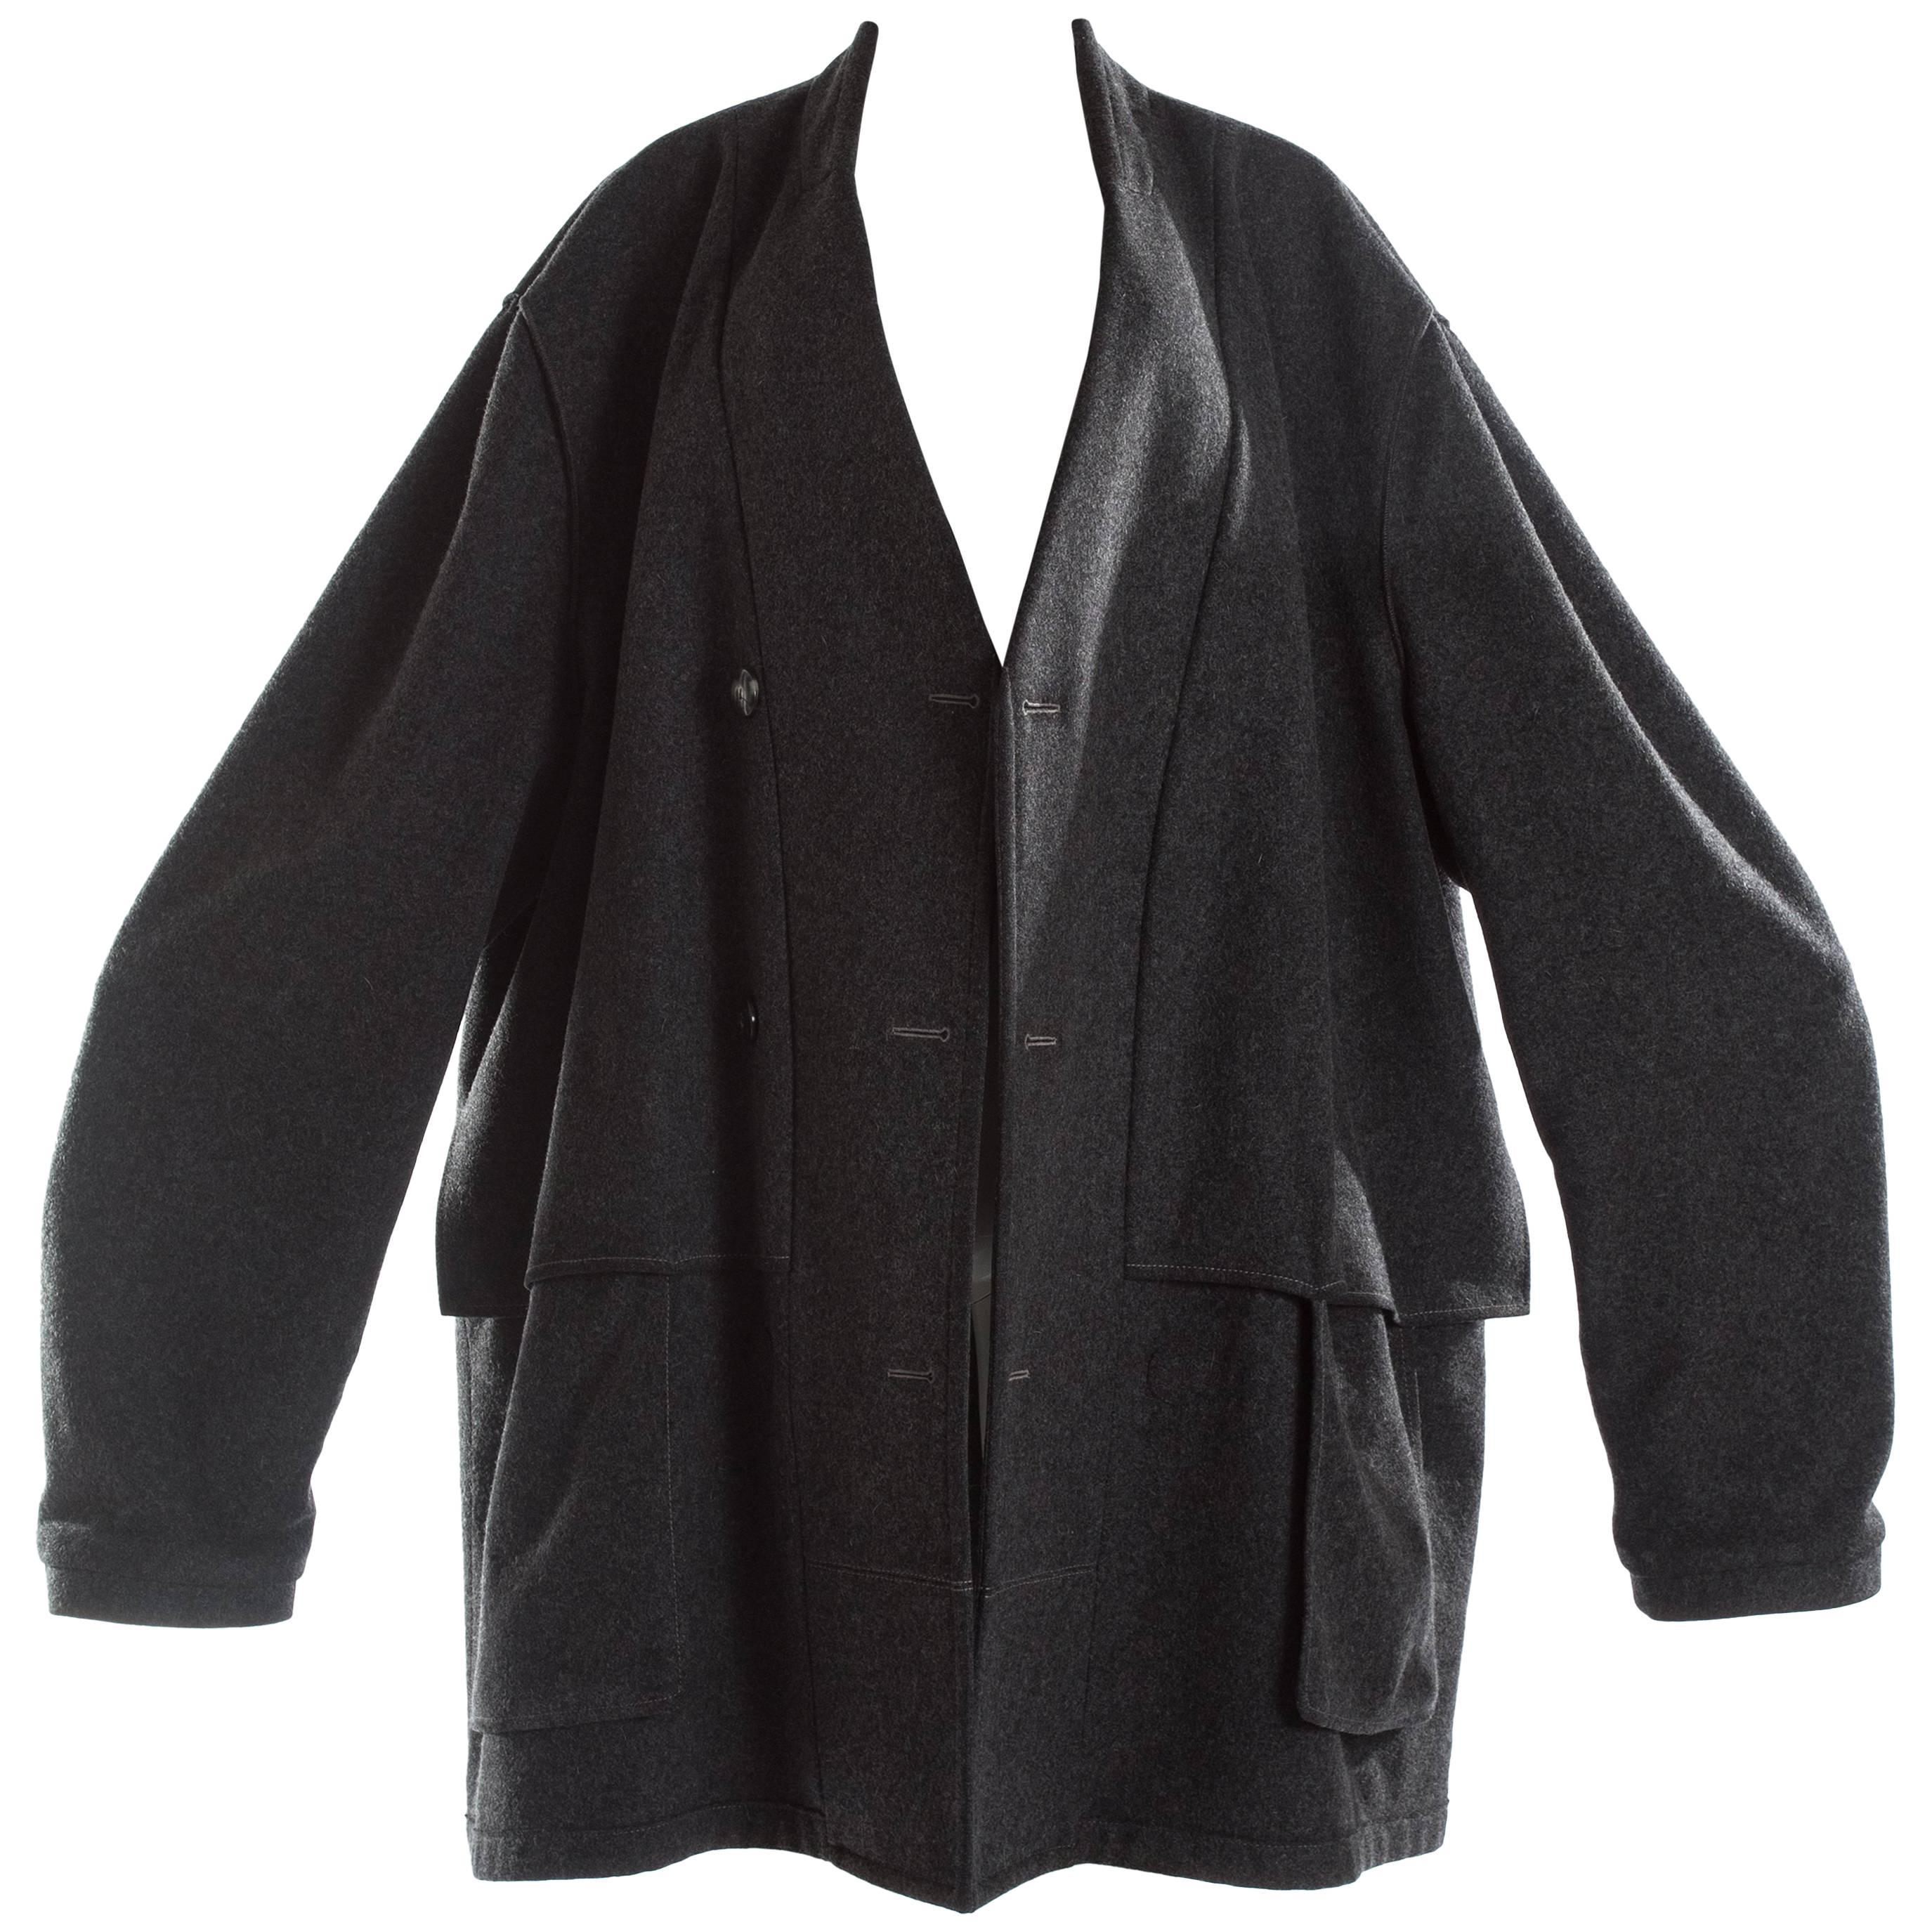 Margiela charcoal melton wool overcoat, A / W 2000